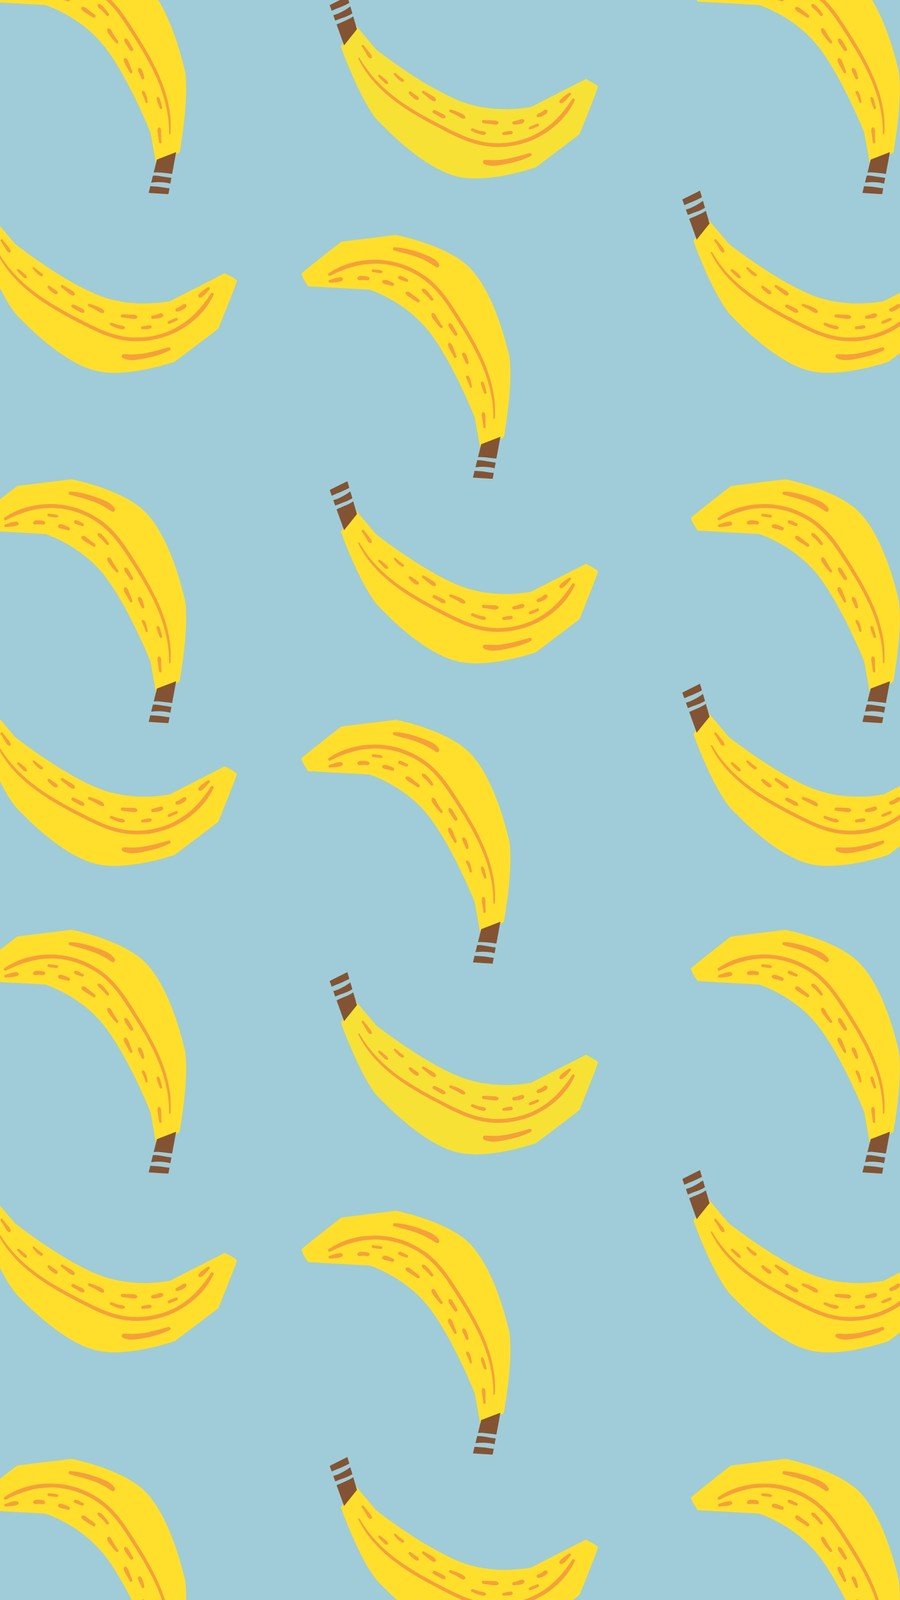 Free and customizable banana templates